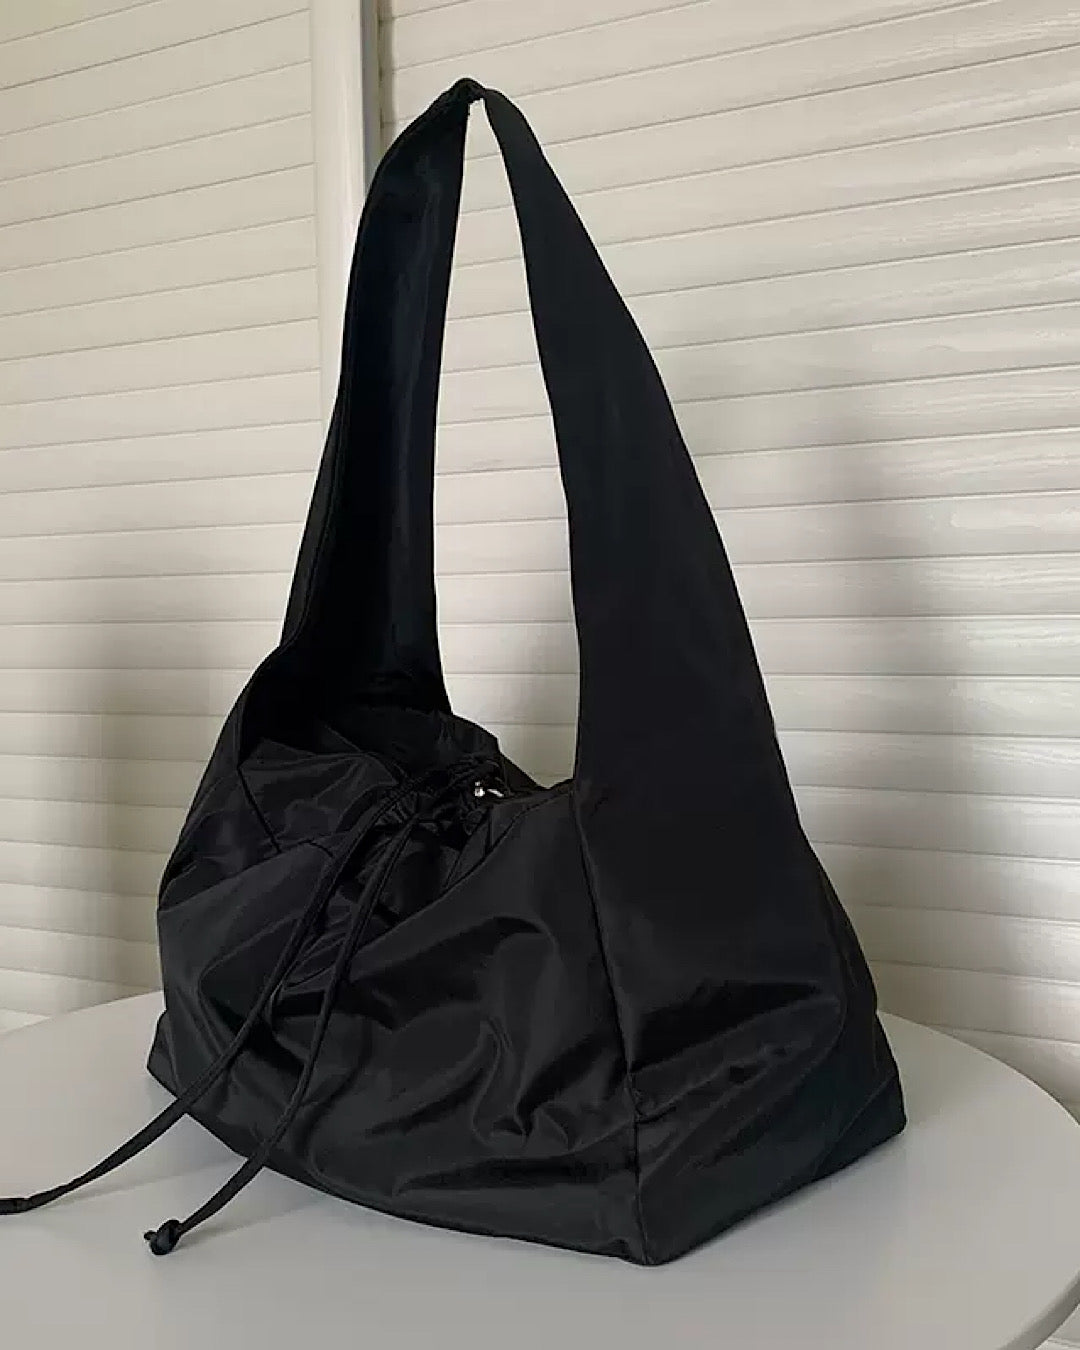 Allpurpose wipeslarge capacity bag  HL2792